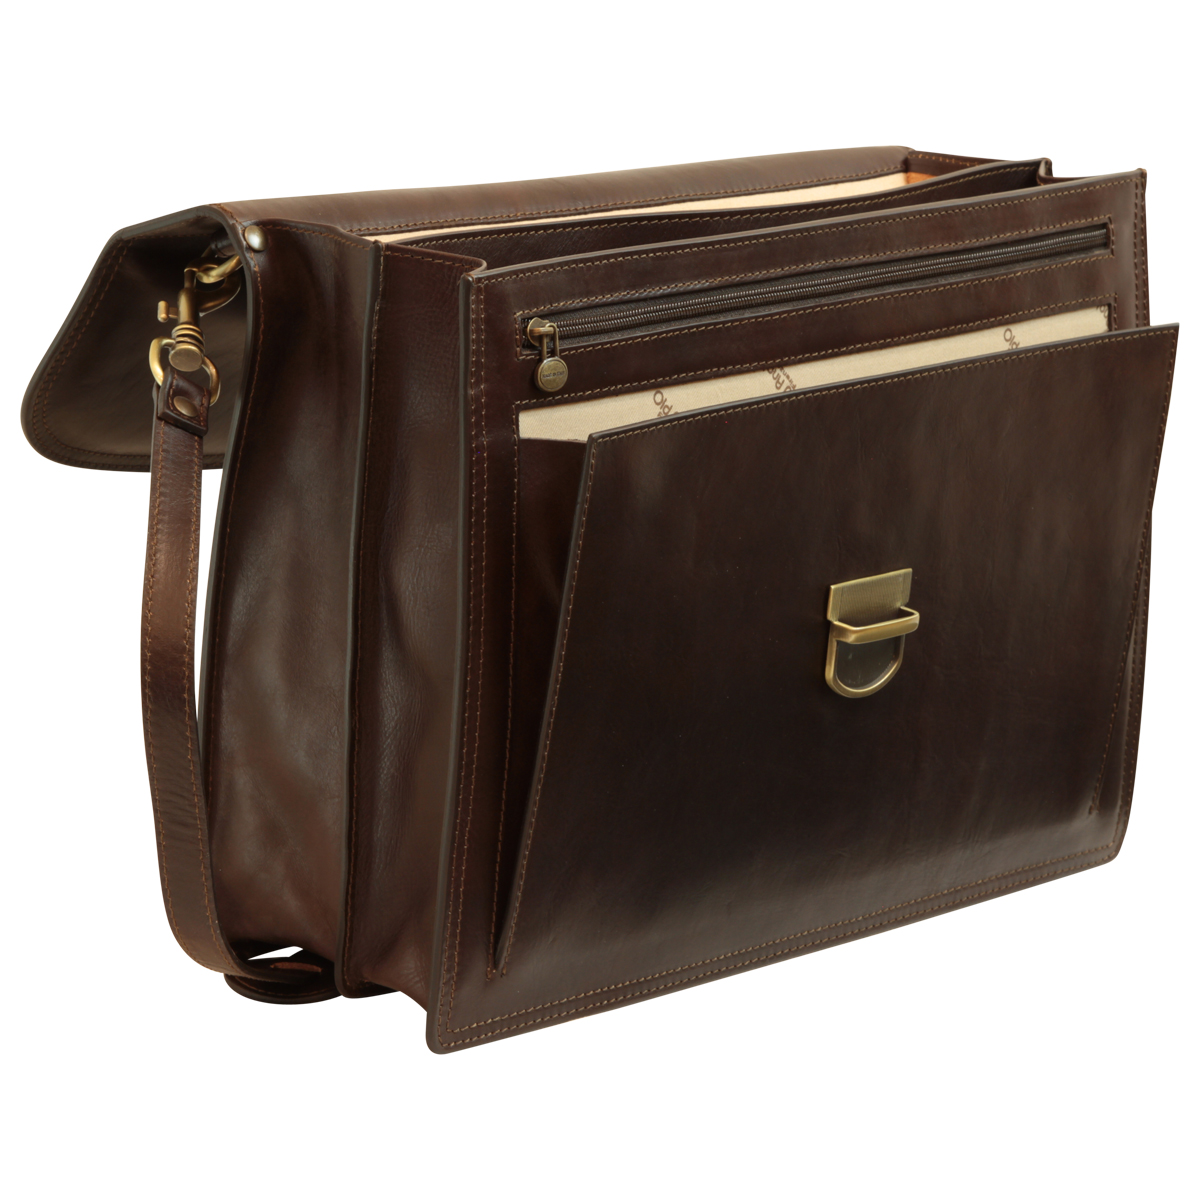 Briefcase with leather shoulder strap - Dark Brown | 201689TM US | Old Angler Firenze